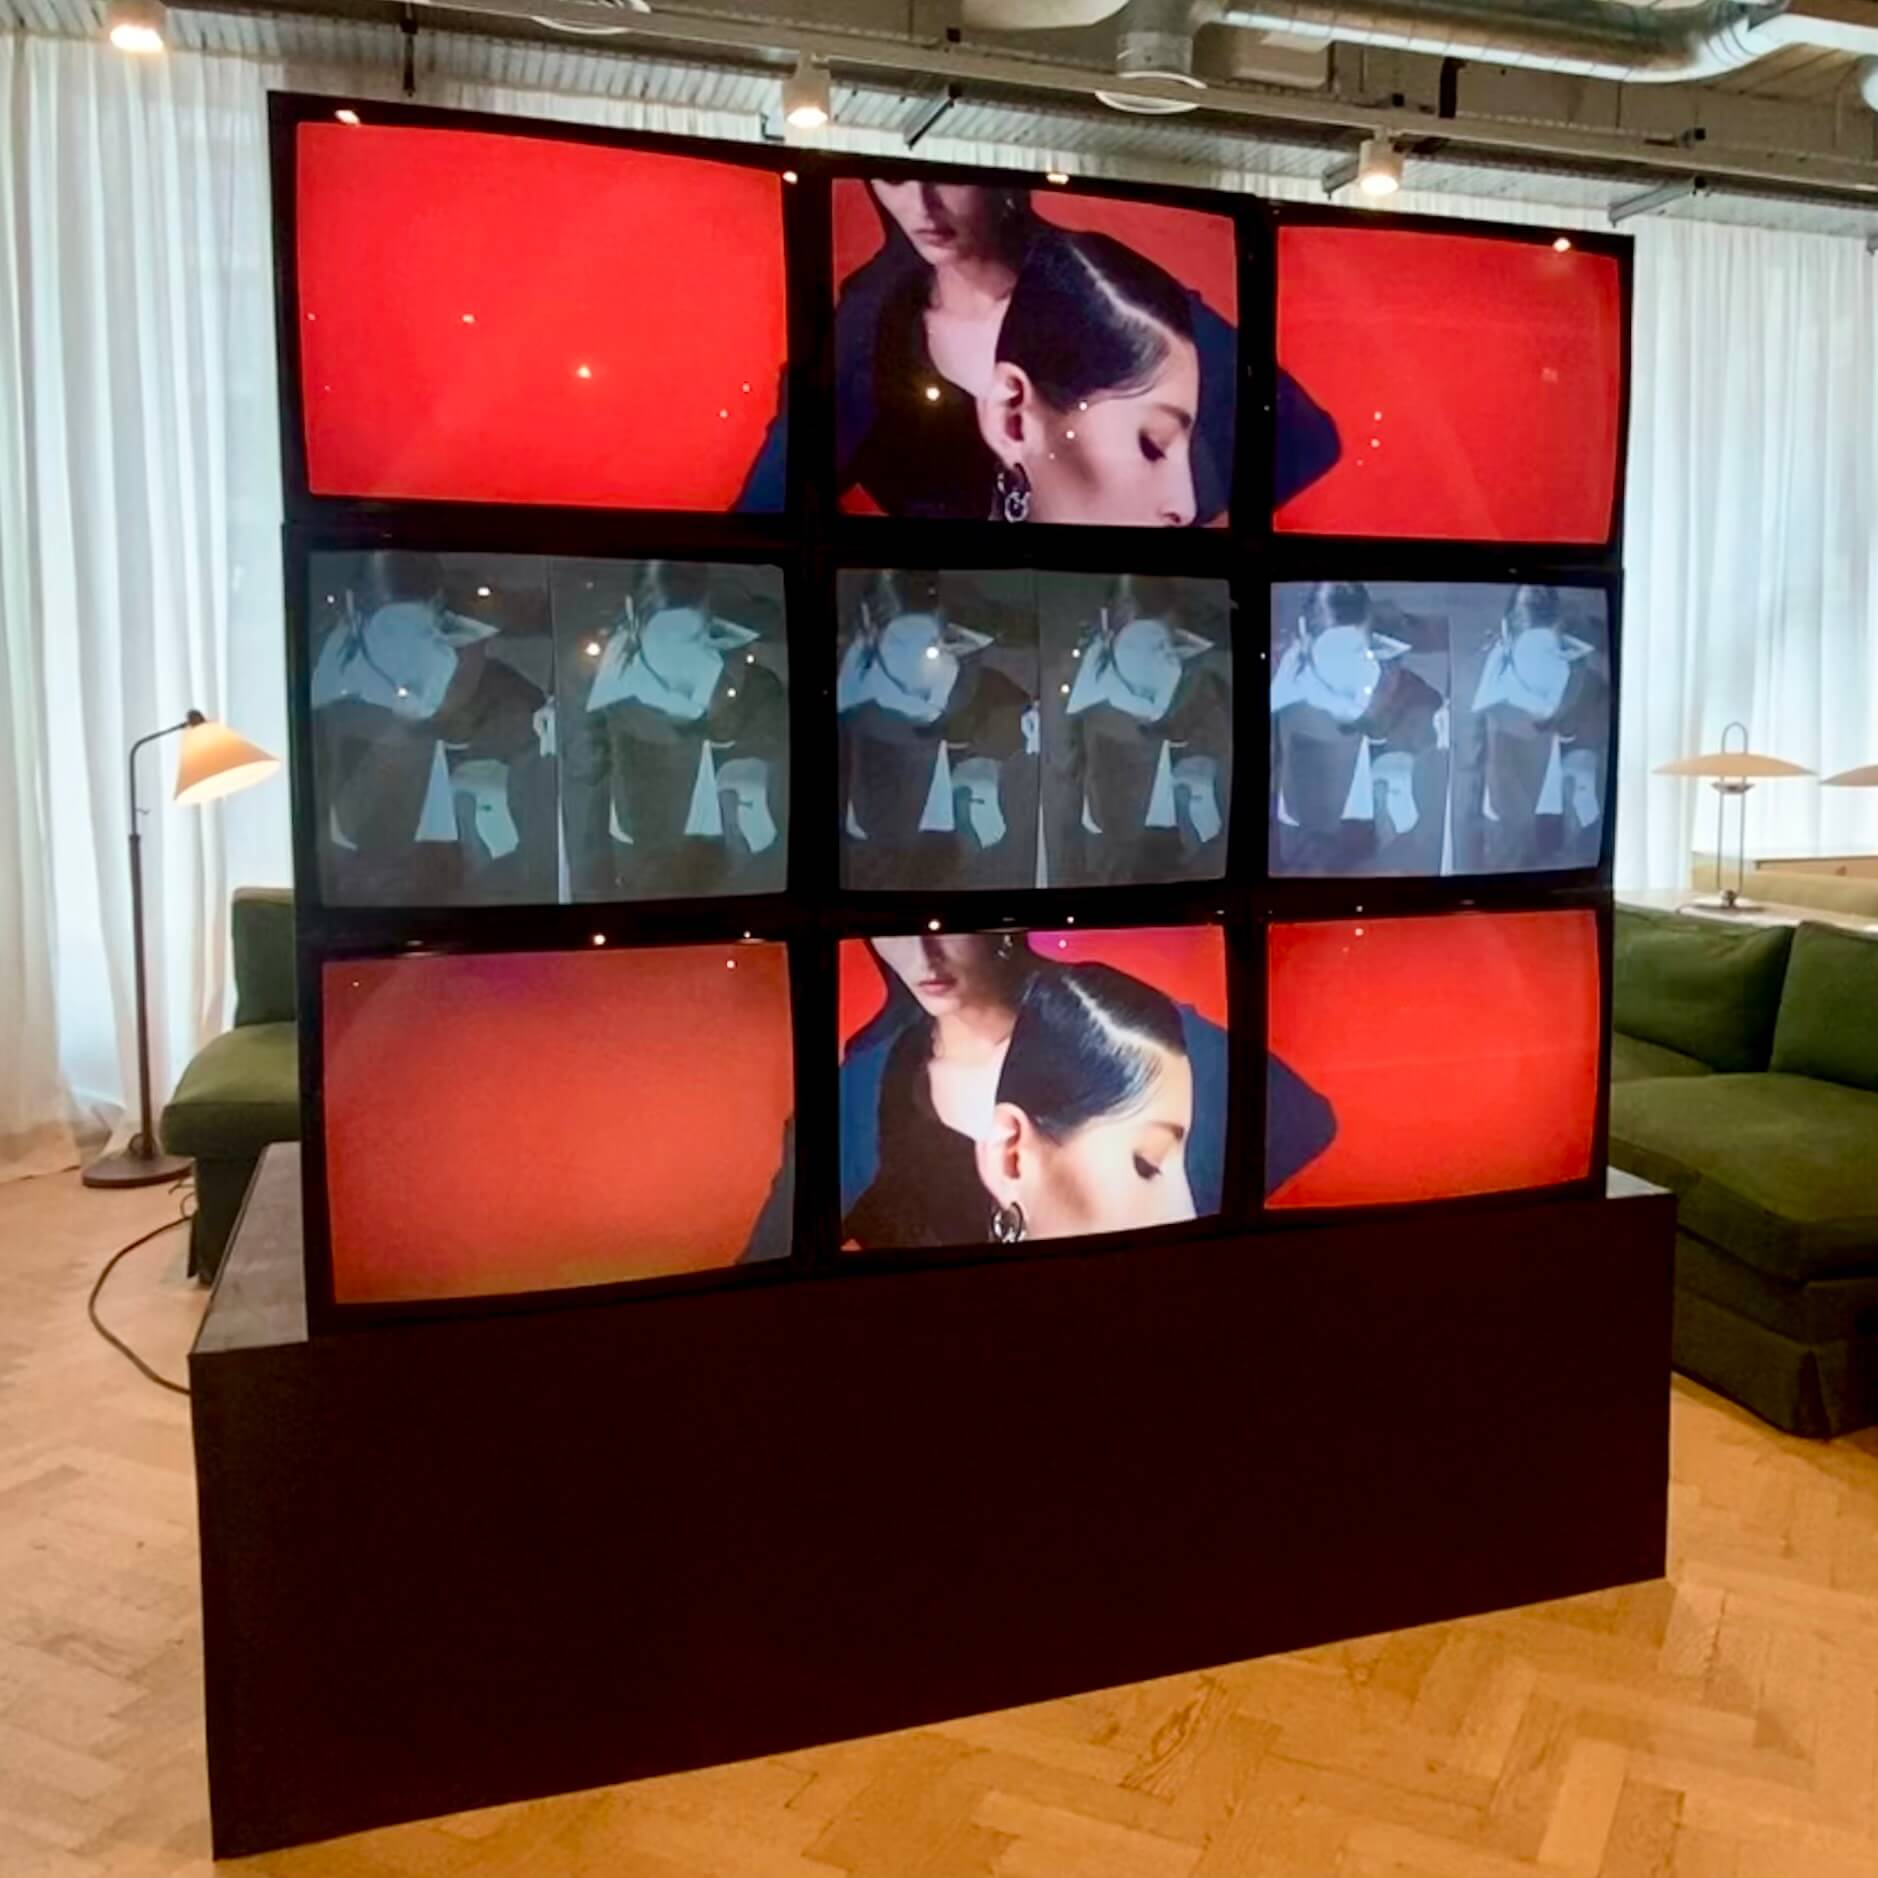 3x3 CRT Video Wall Screens with VideoWall Processor